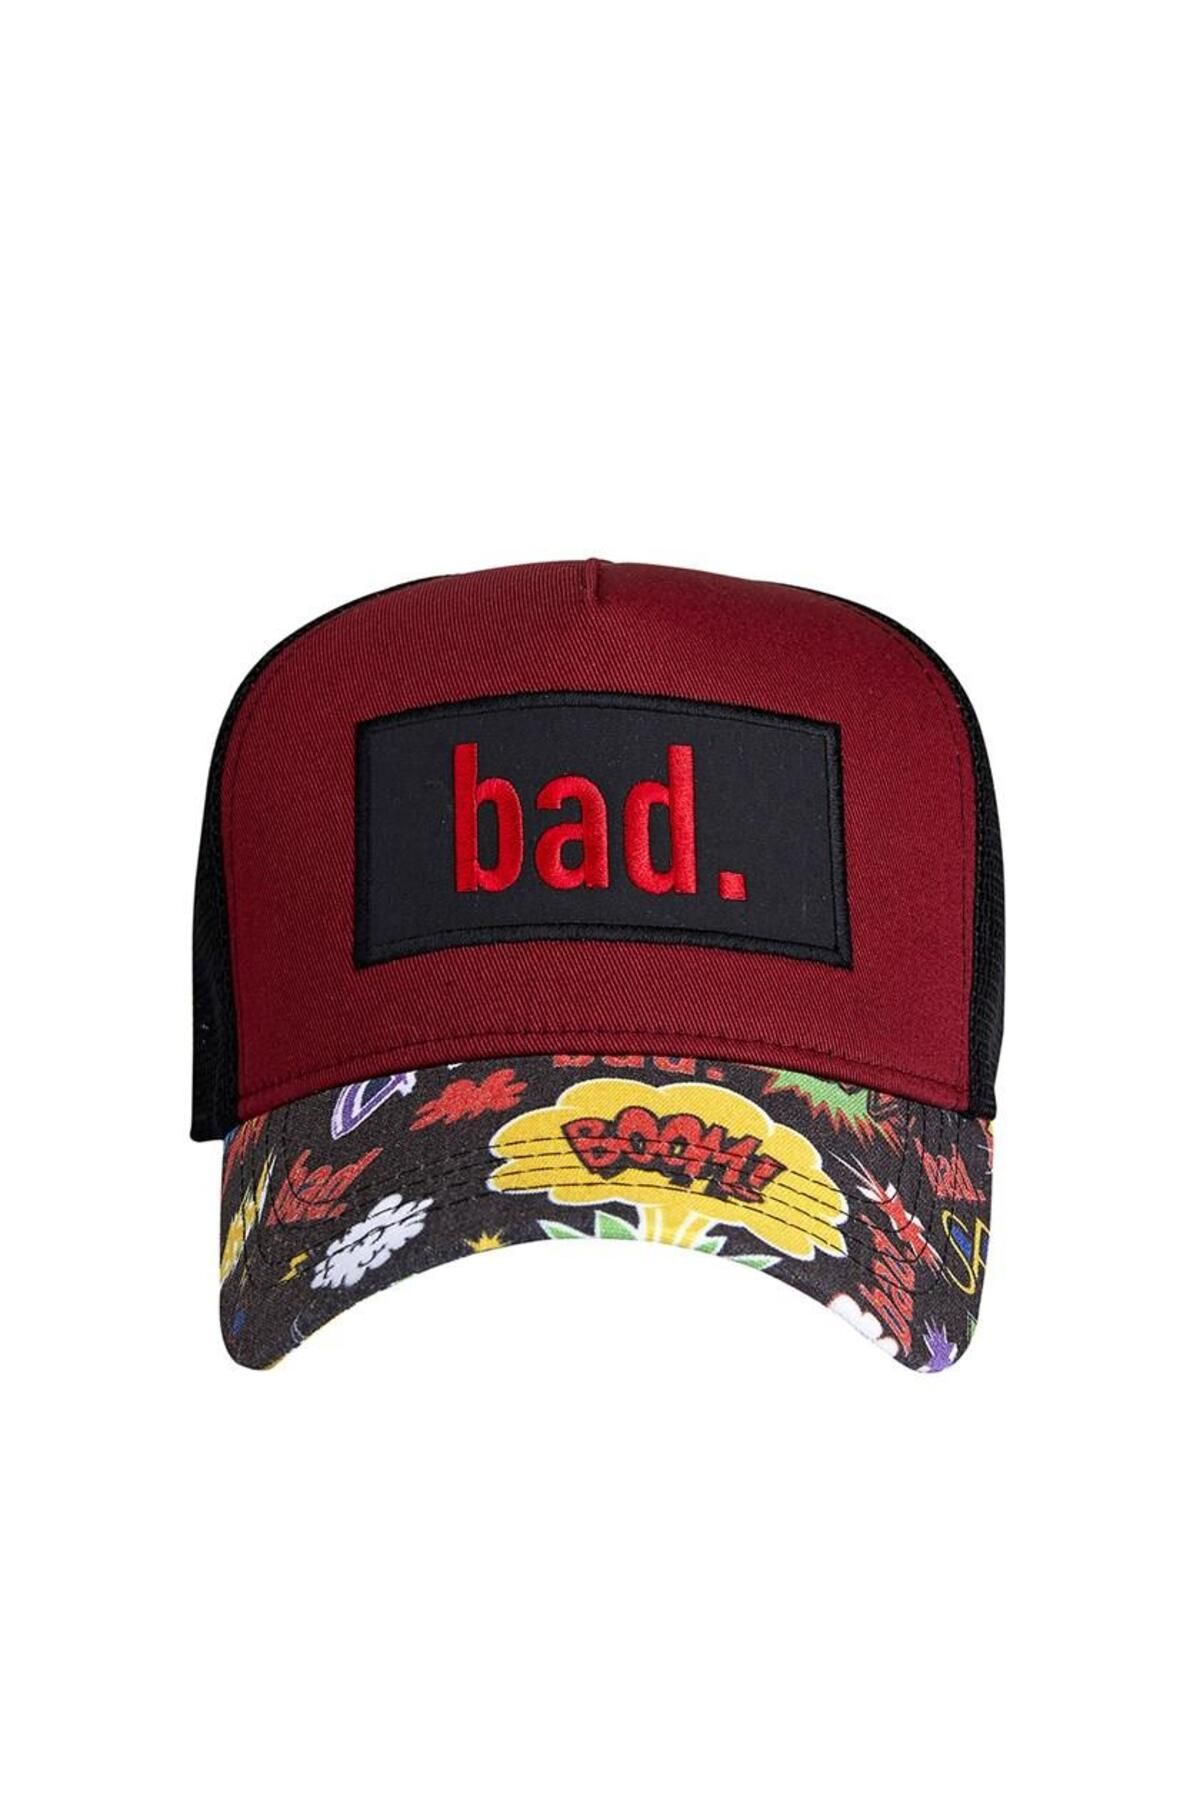 Bad Bear 20.02.01.005-c20 Boom Erkek Şapka